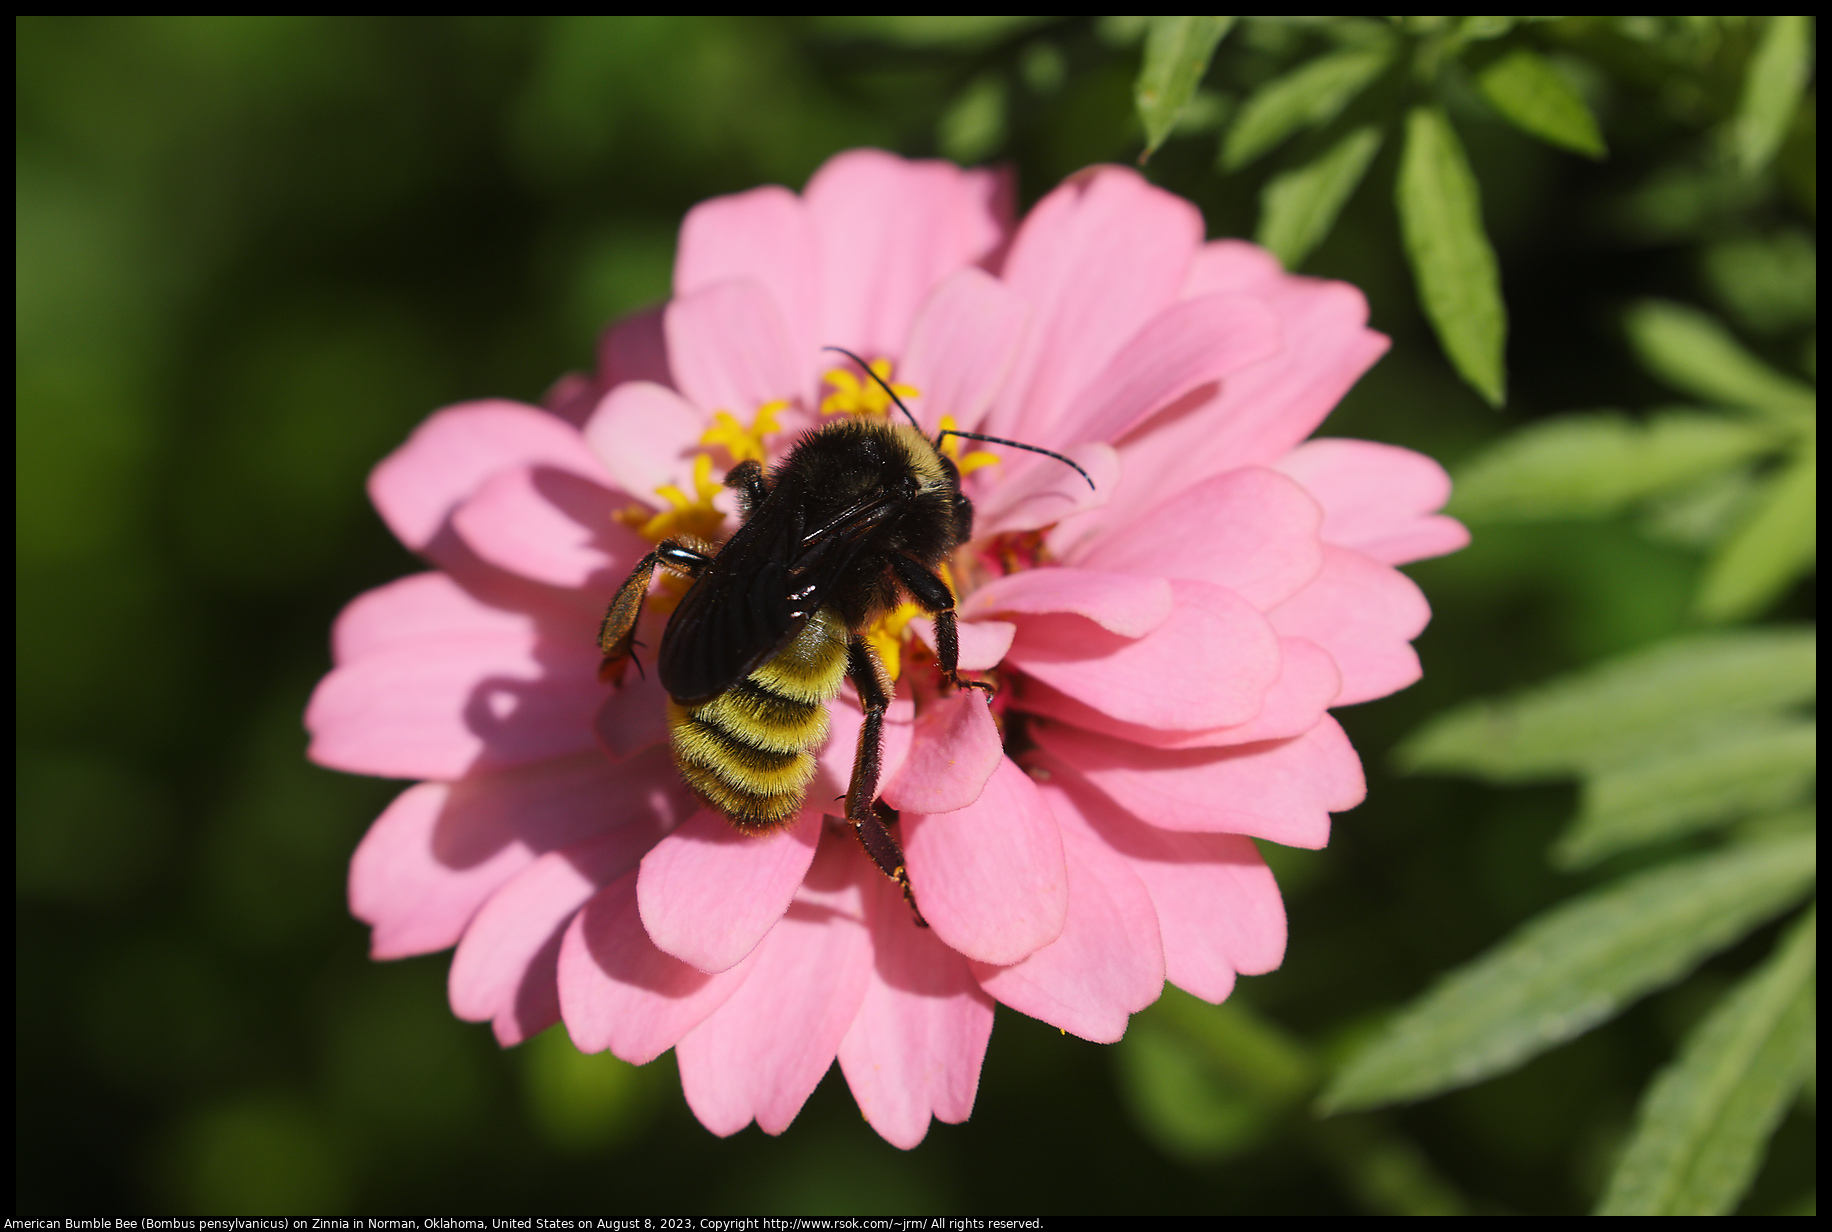 American Bumble Bee (Bombus pensylvanicus) on Zinnia in Norman, Oklahoma, United States on August 8, 2023